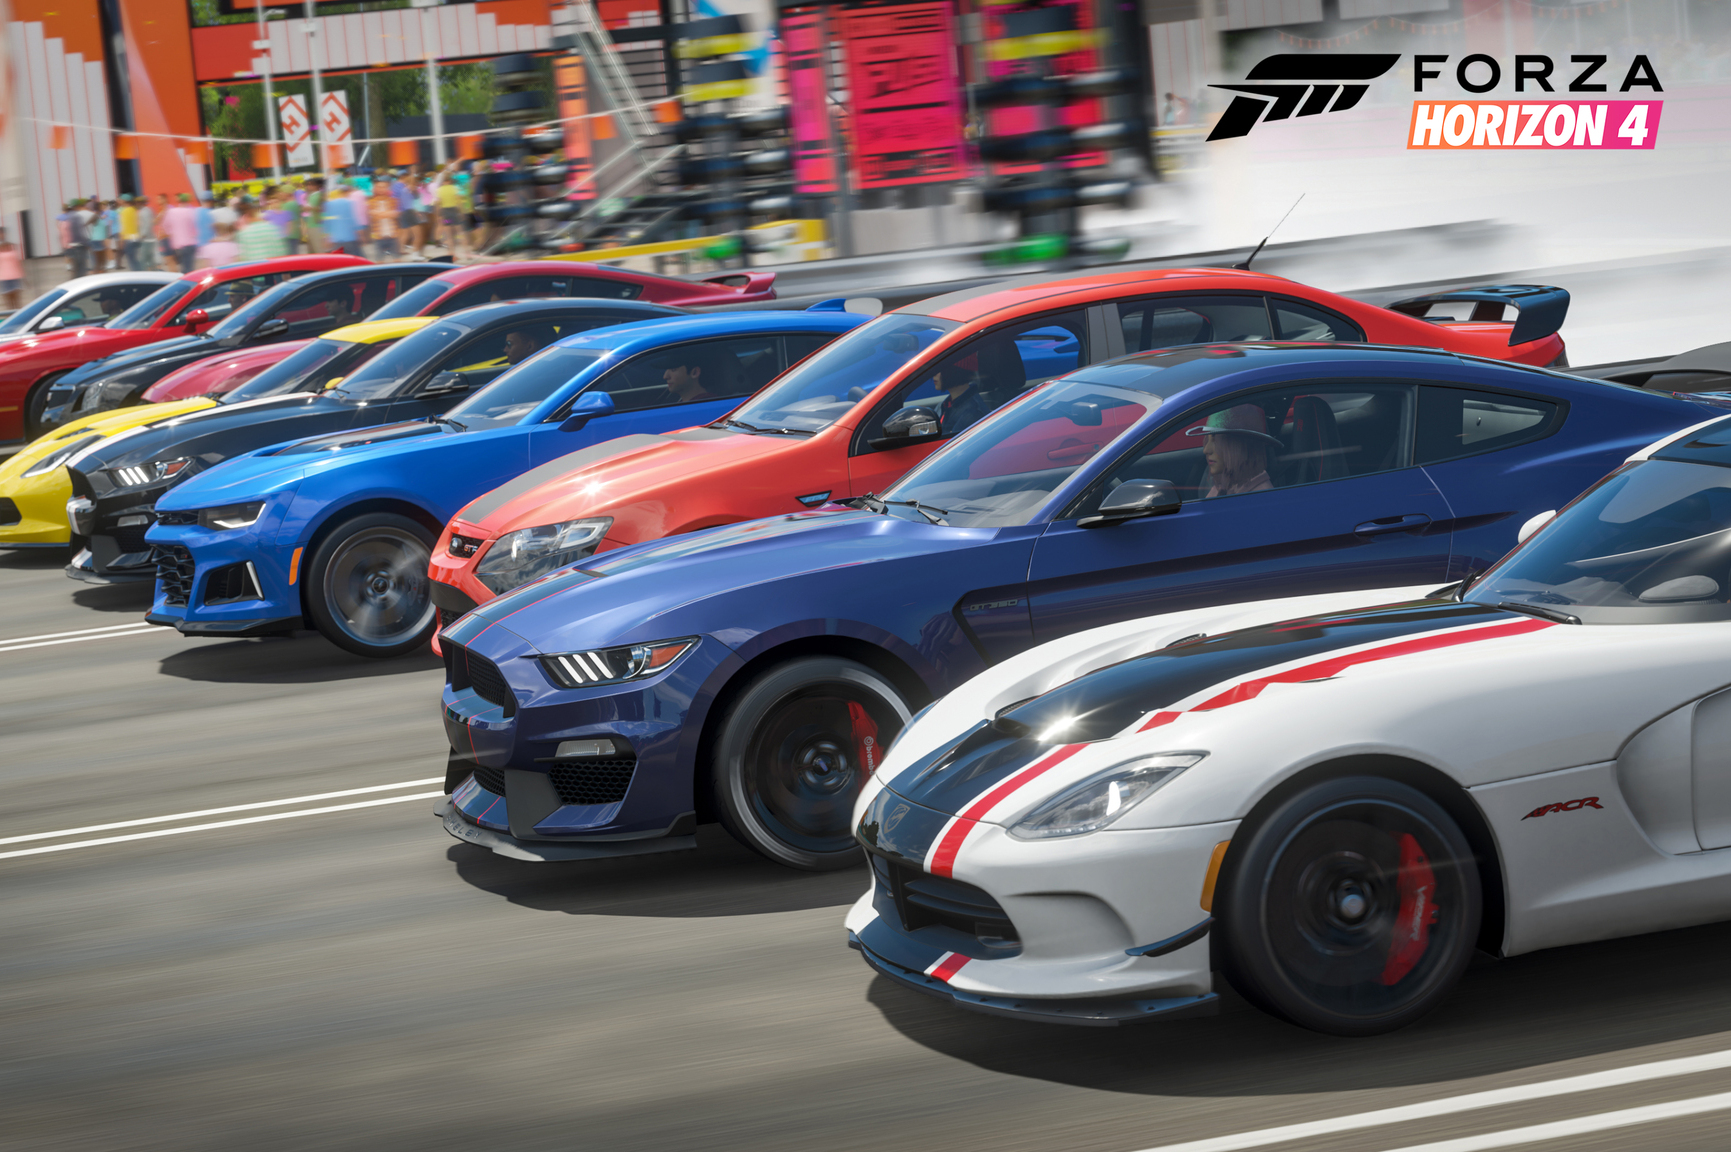 Forza Horizon 3 review: The best arcade racing series around roars onto PCs